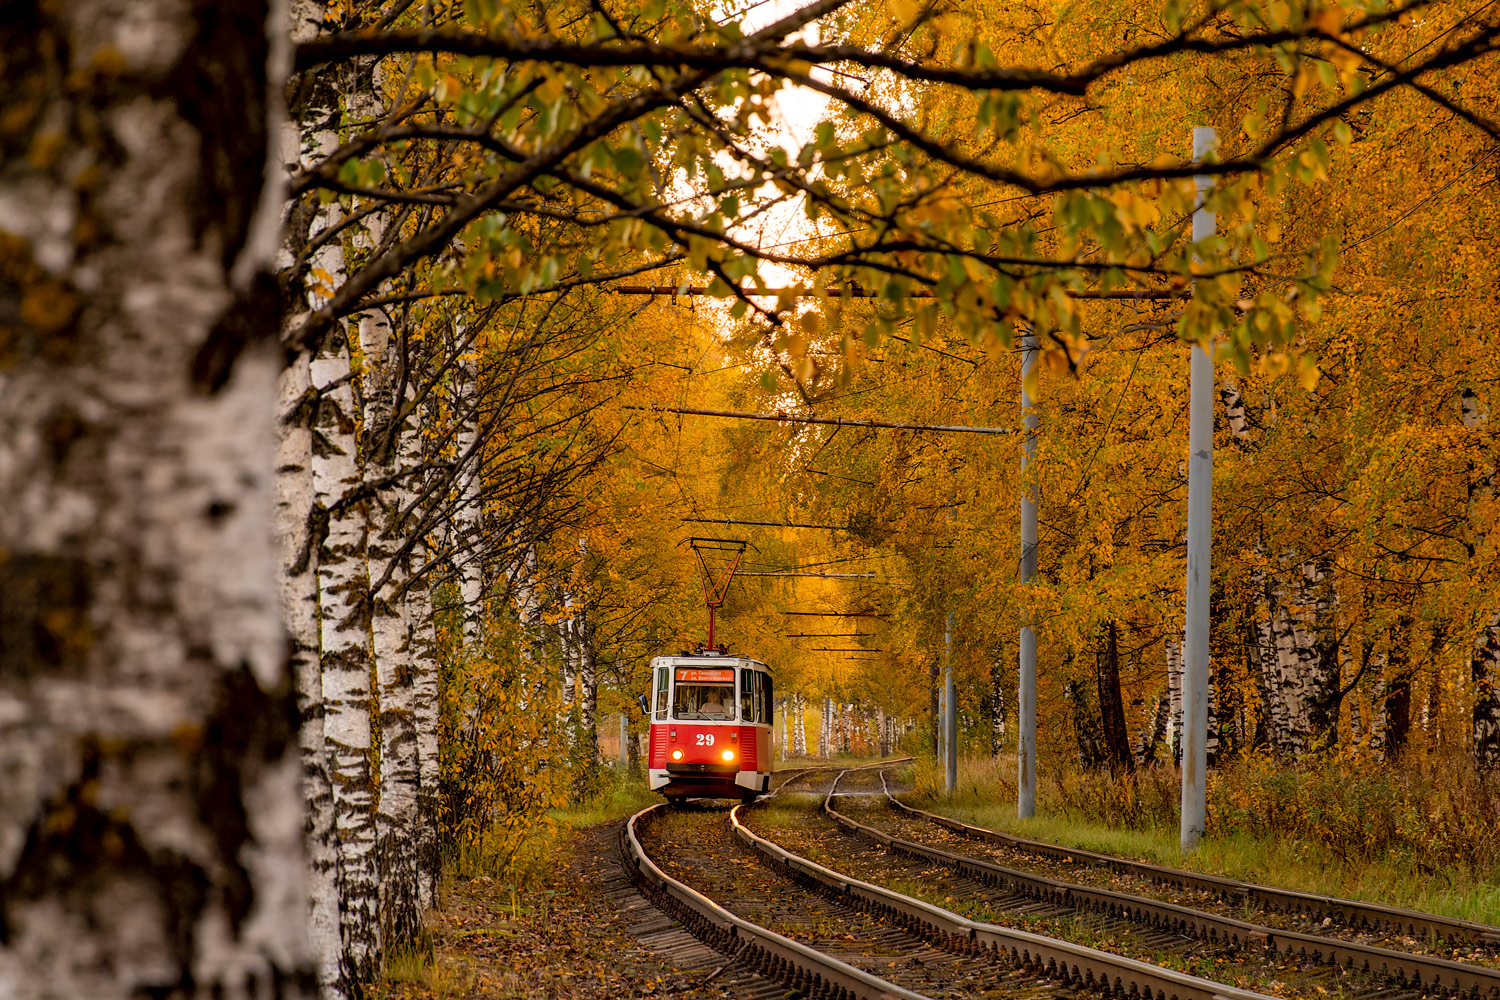 Yaroslavl — Tramway lines